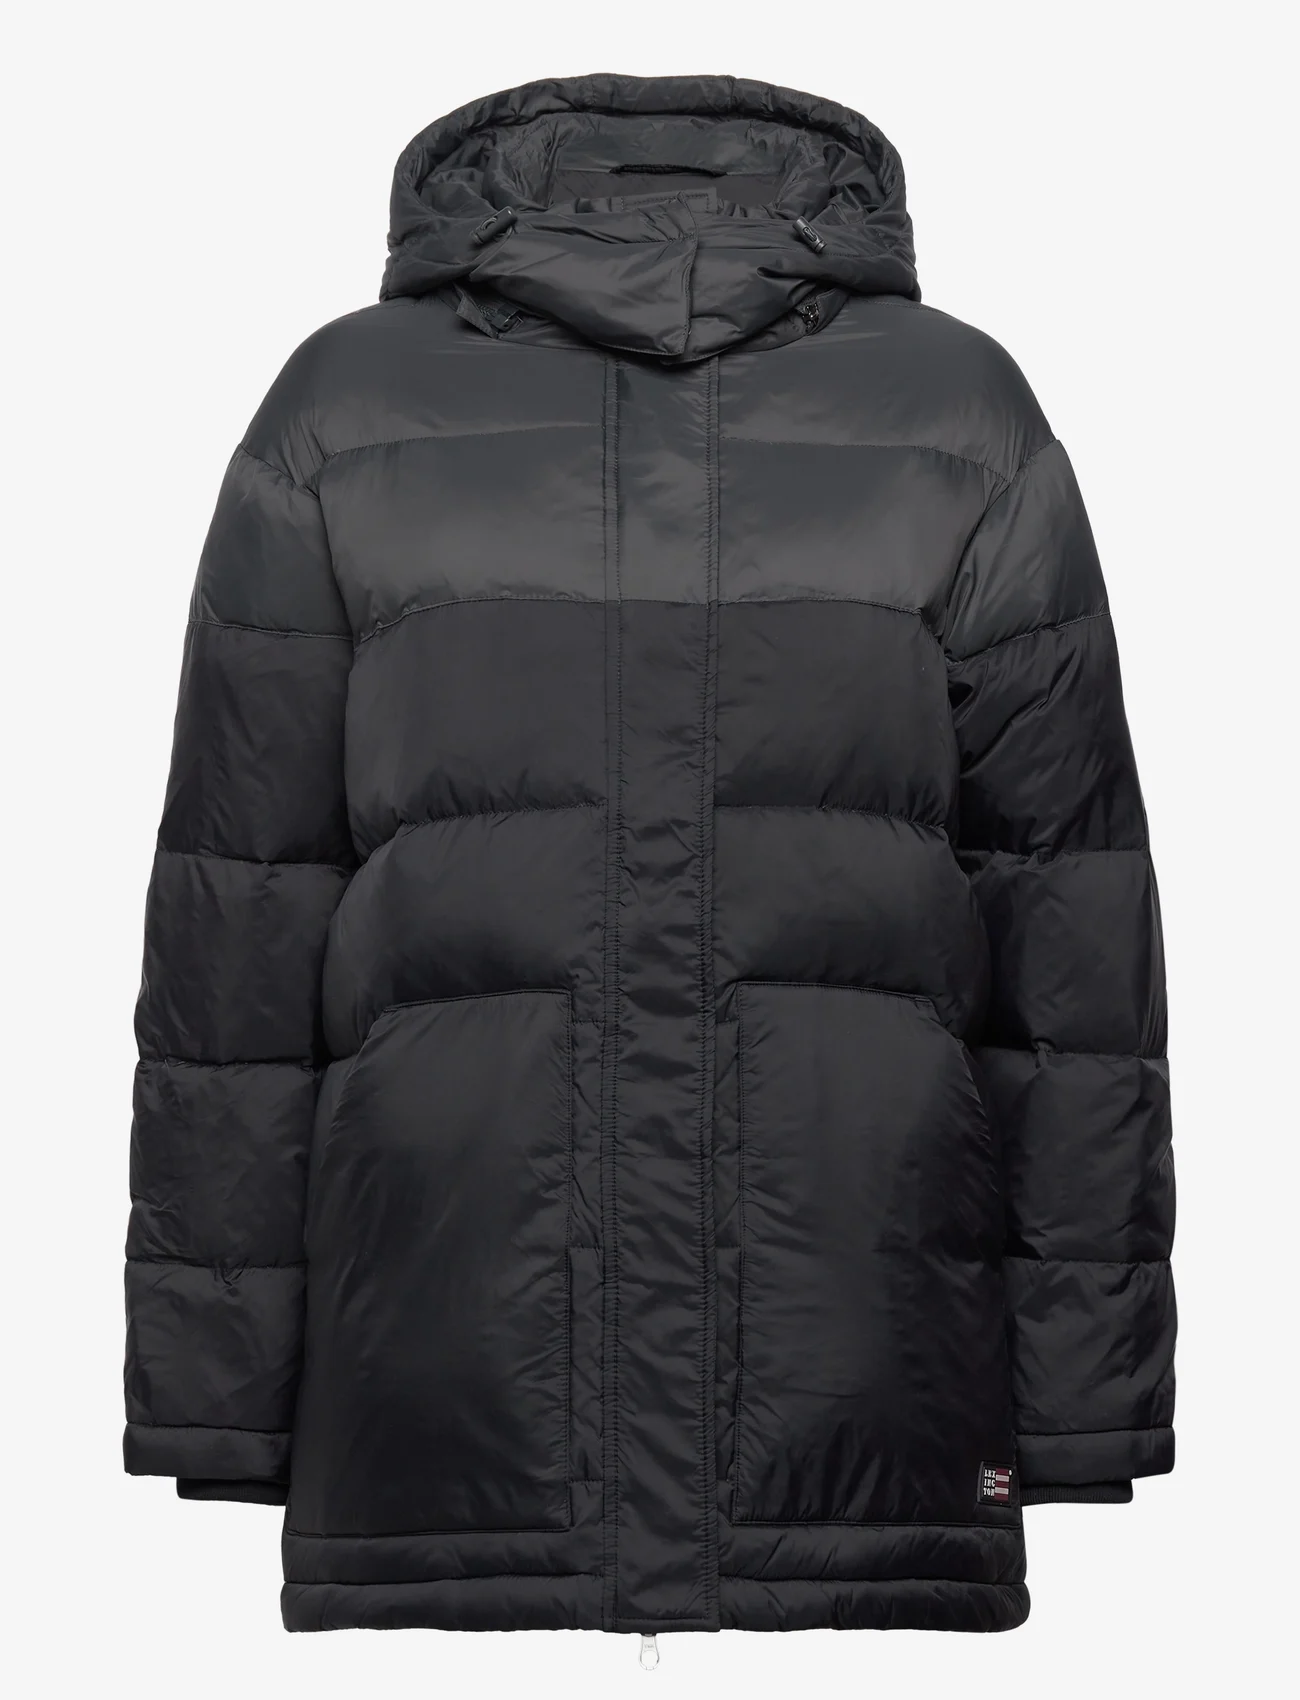 Lexington Clothing - Alba Down Parka - winter jacket - black/gray - 0